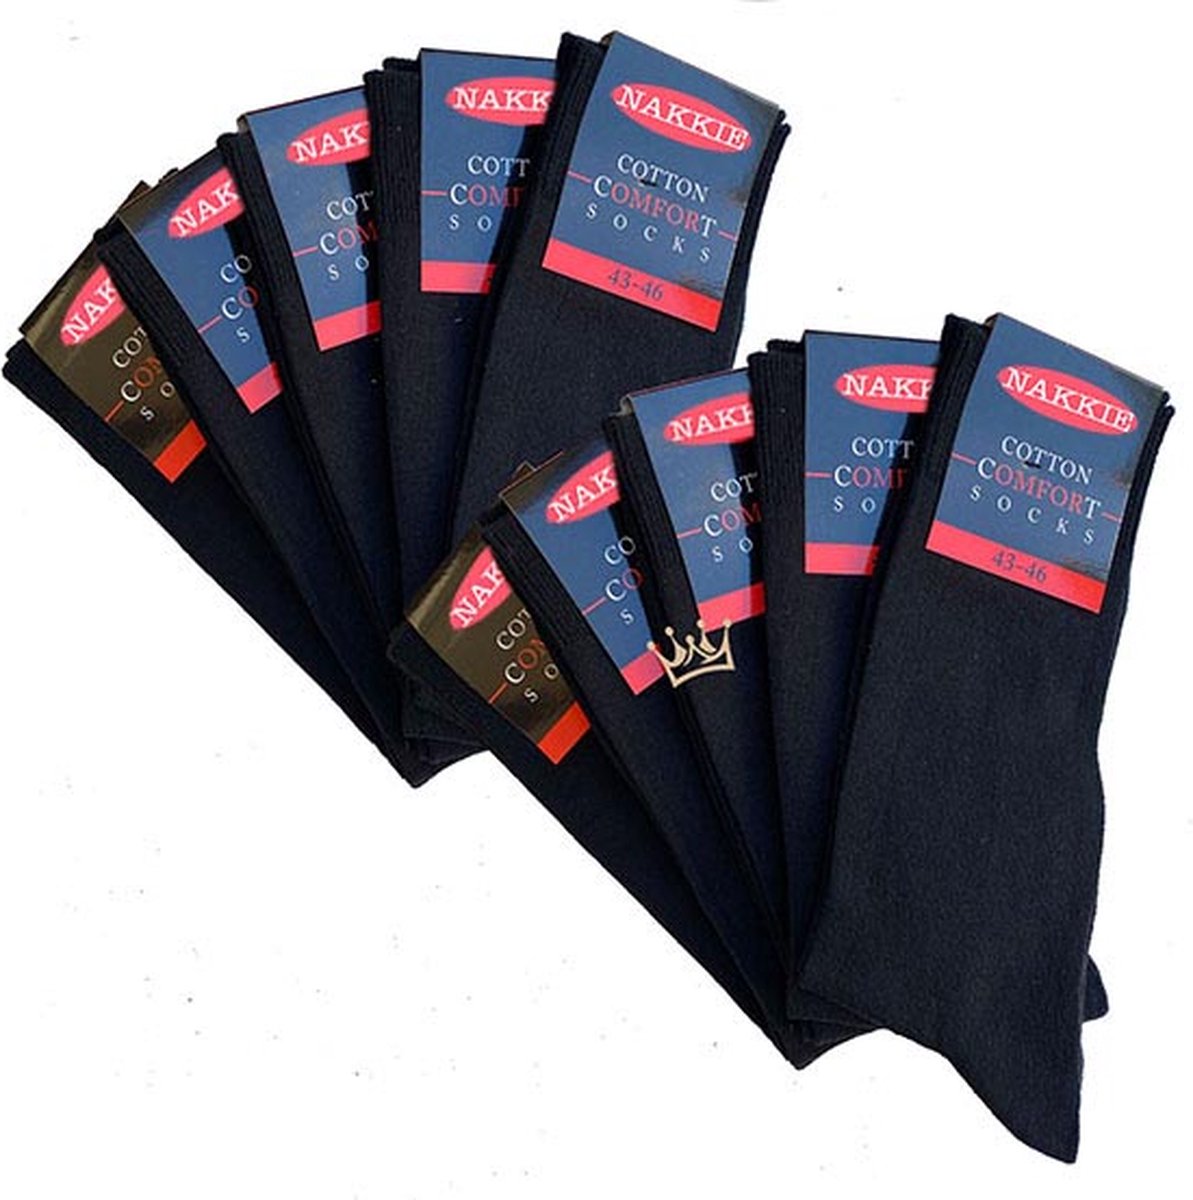 10 paar nette katoenen sokken - Heren sokken - Comfort sokken - Business sokken - Maat 43-46 - Zwart - Multipack - Mega pack